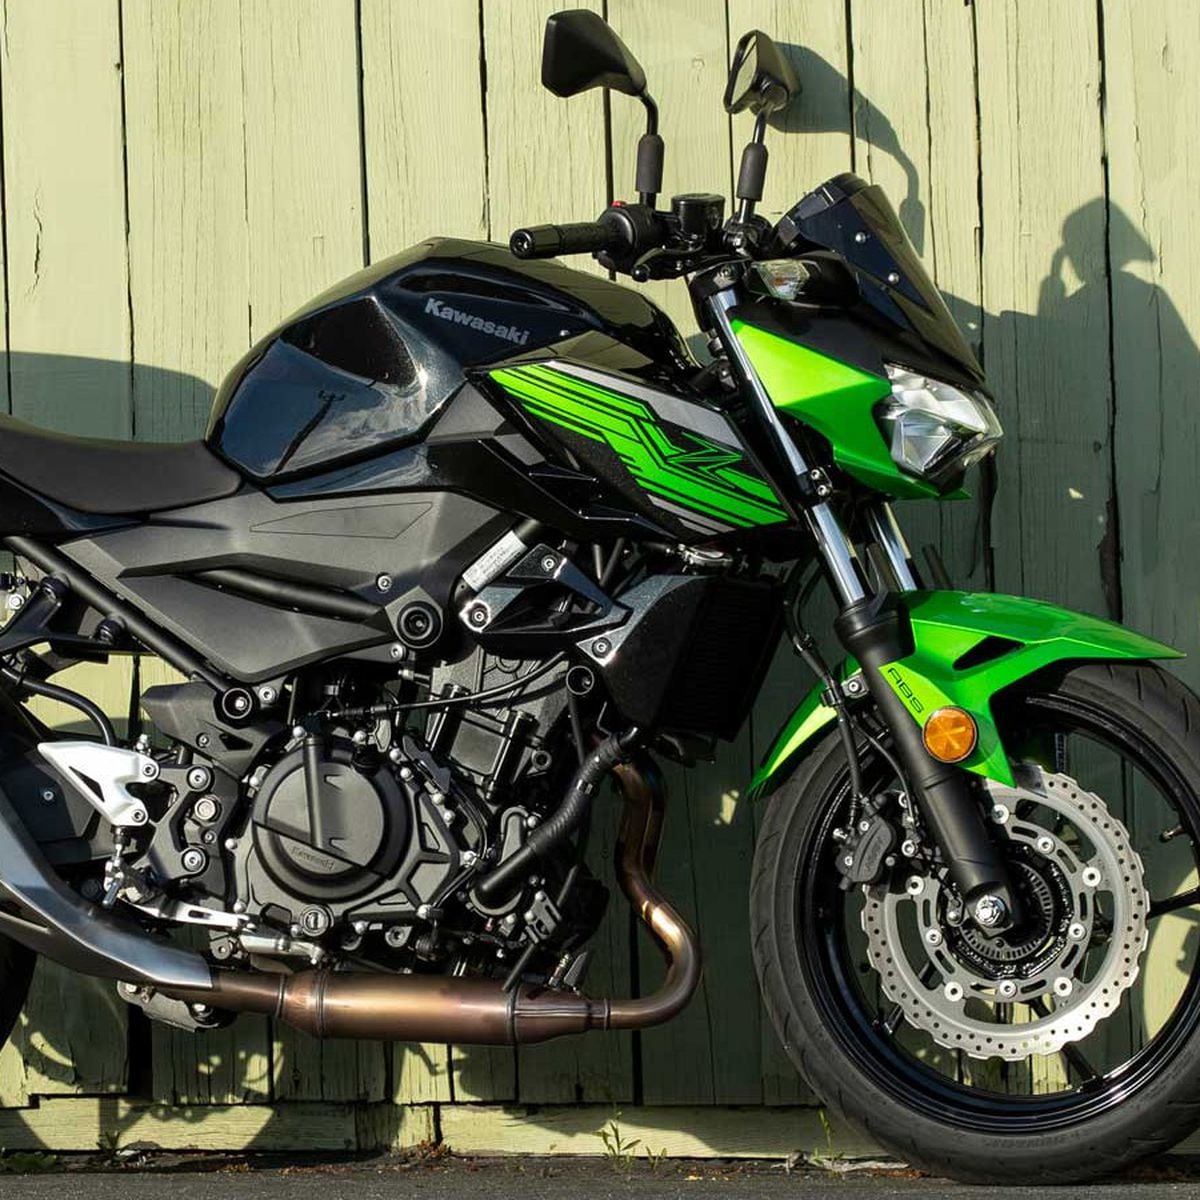 2019 Kawasaki Z400 Ride Review |